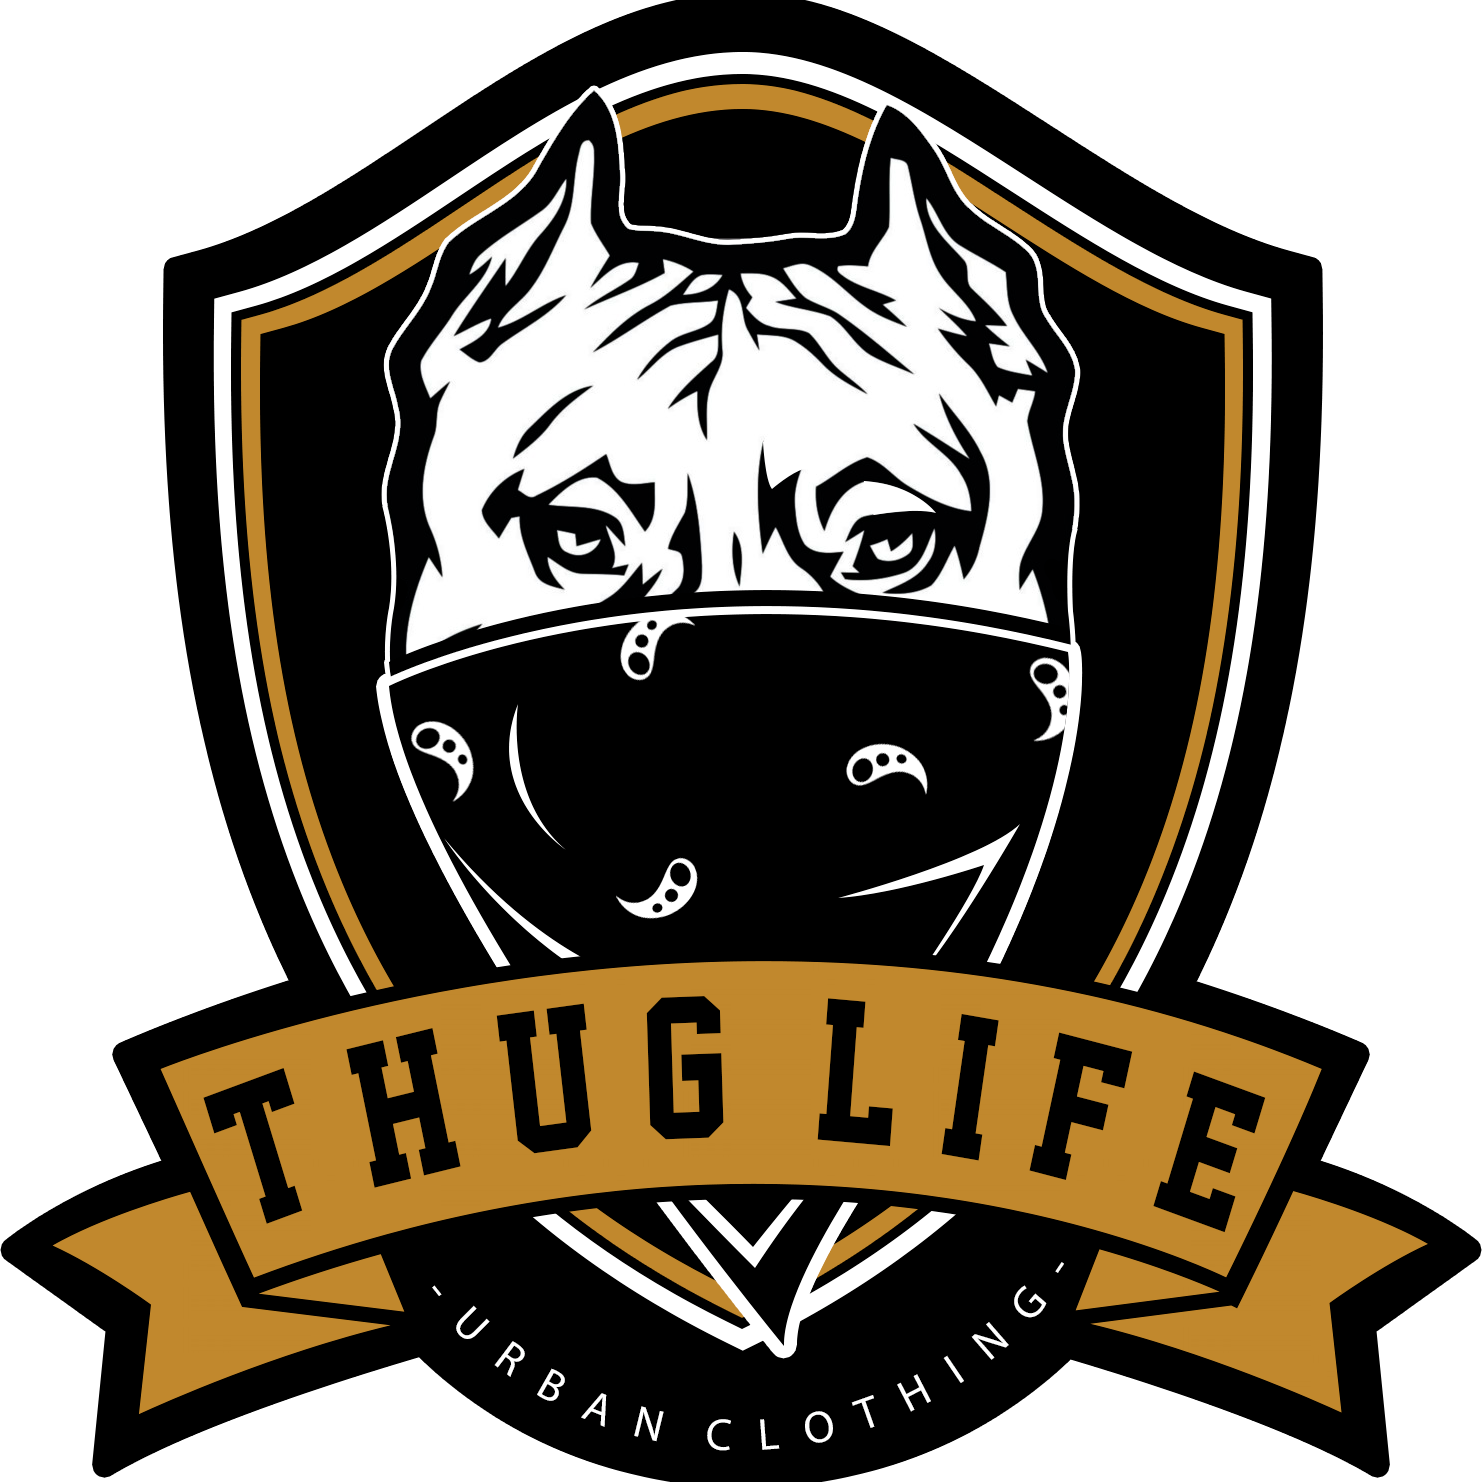 Bandido vidas logotipo transparente fundo PNG